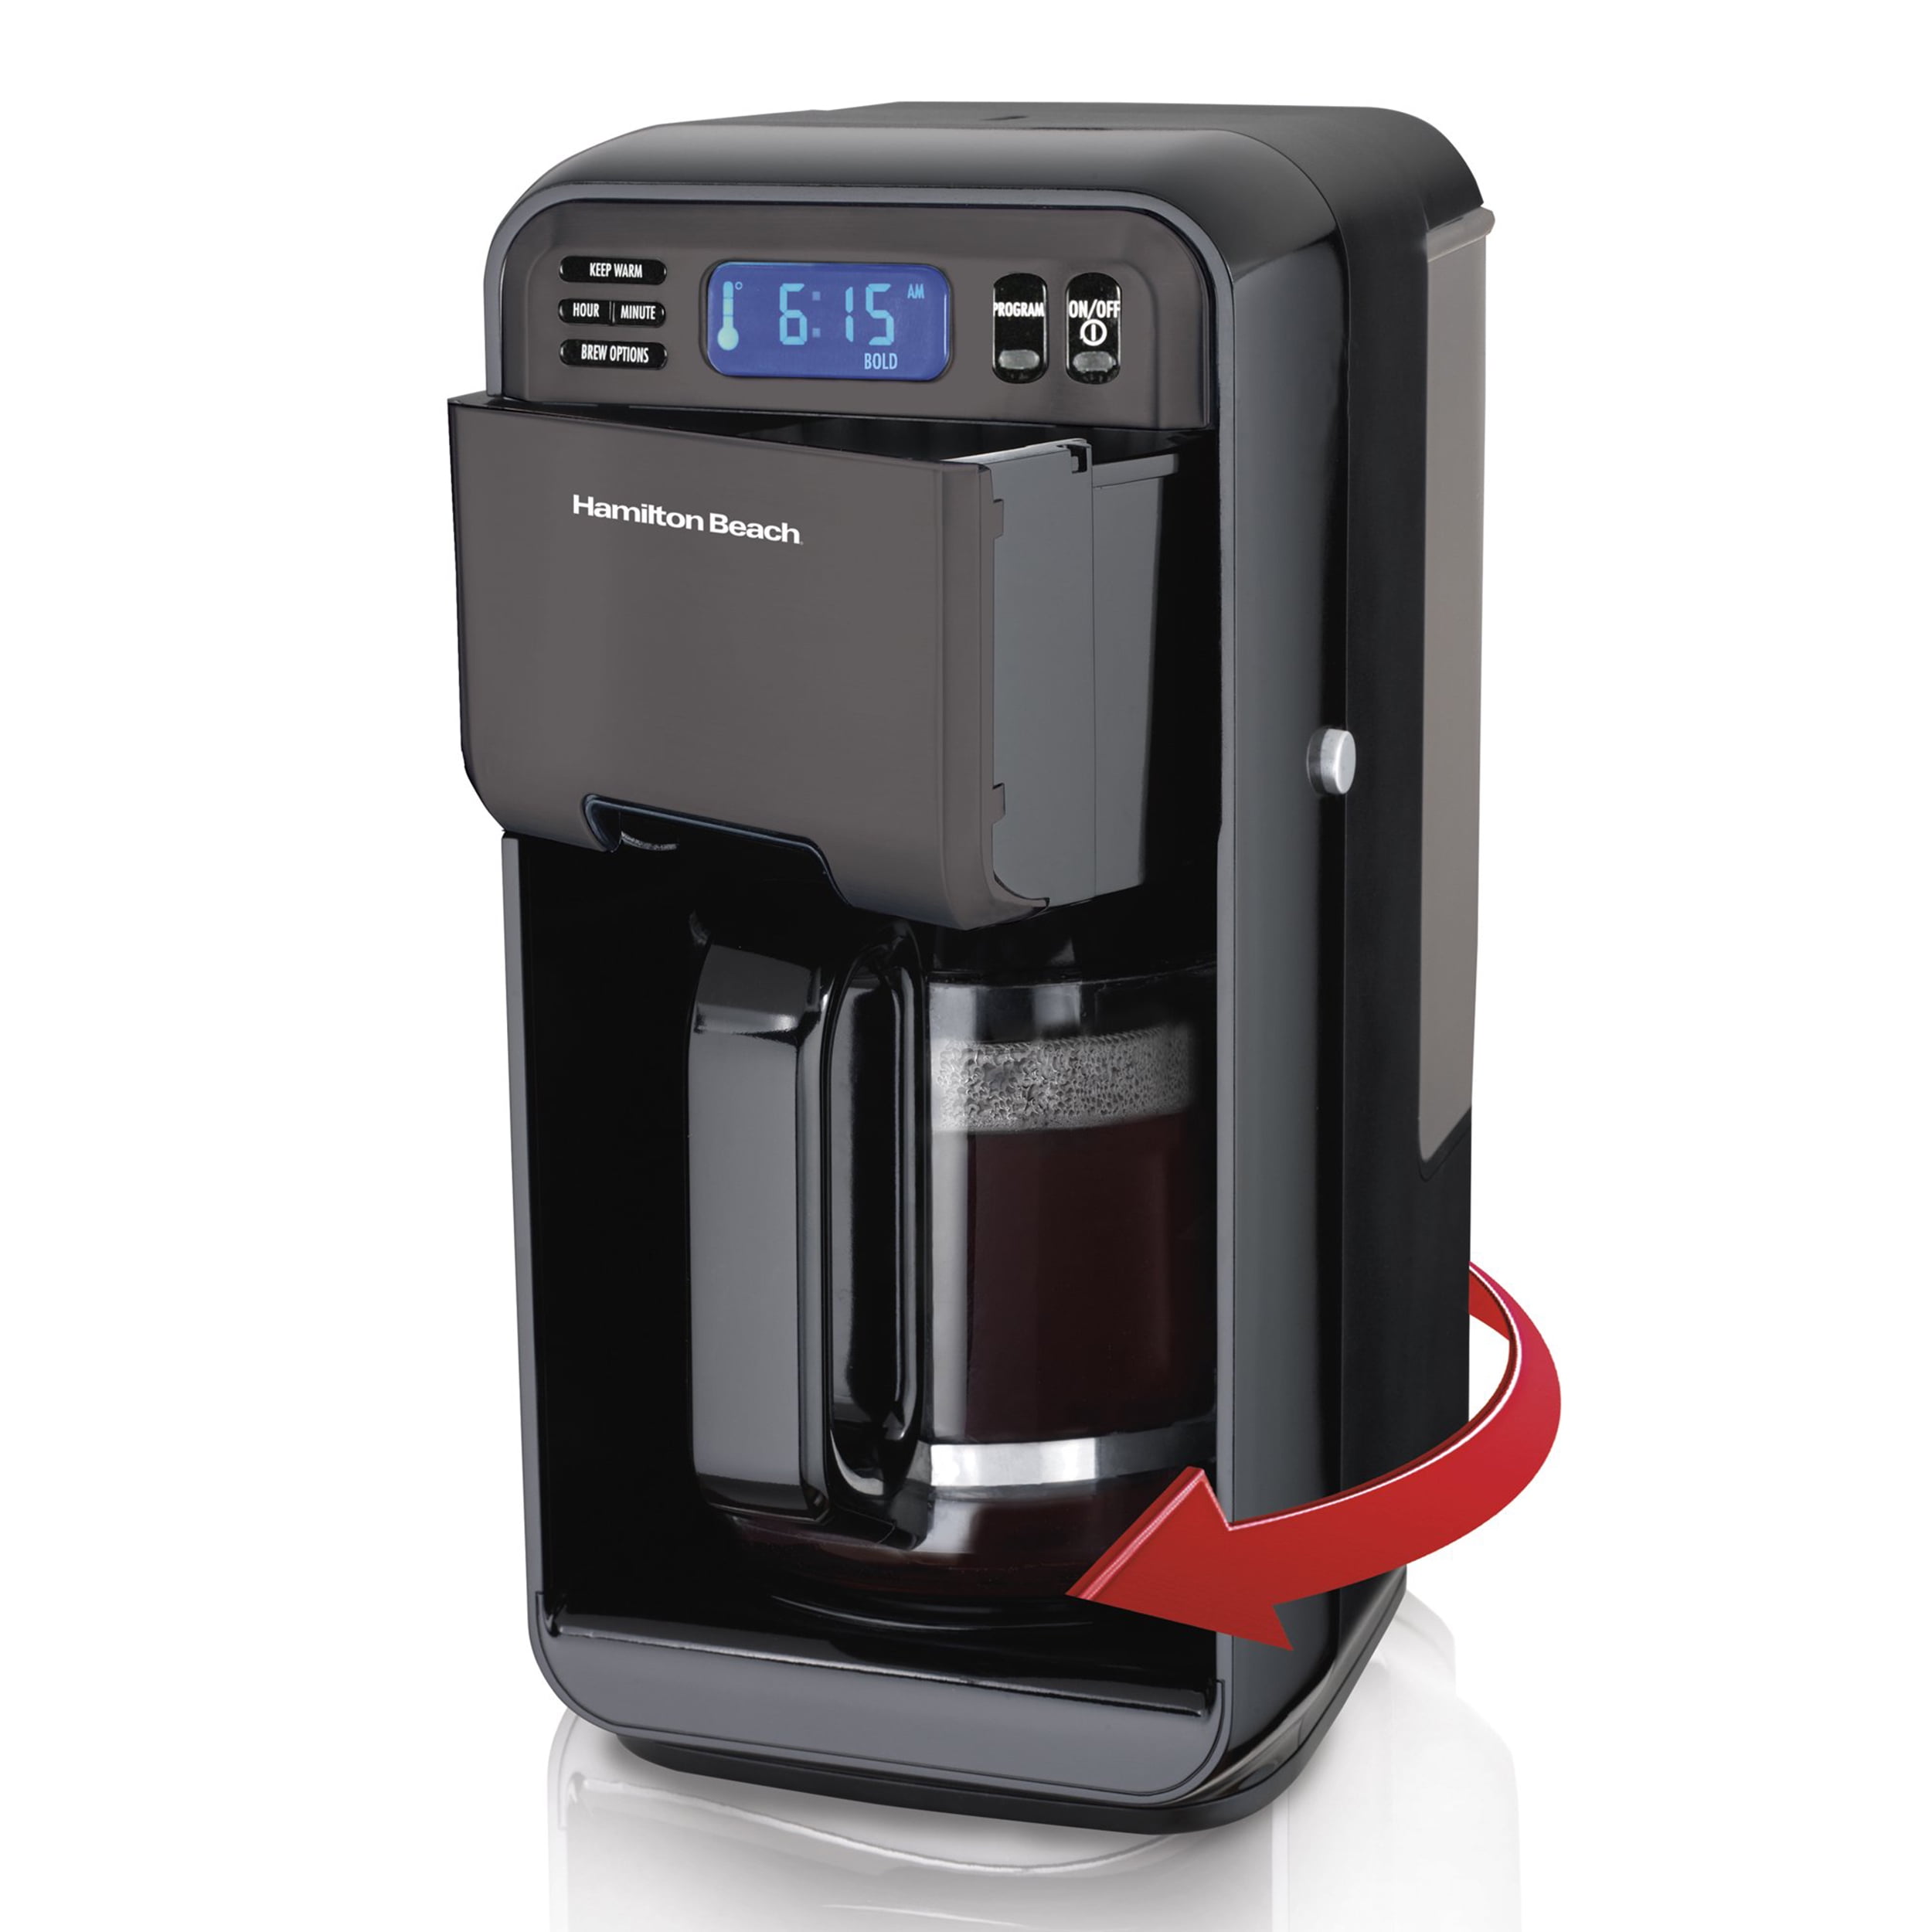 Hamilton Beach® Programmable Coffee Maker 12 Cup Capacity & Reviews